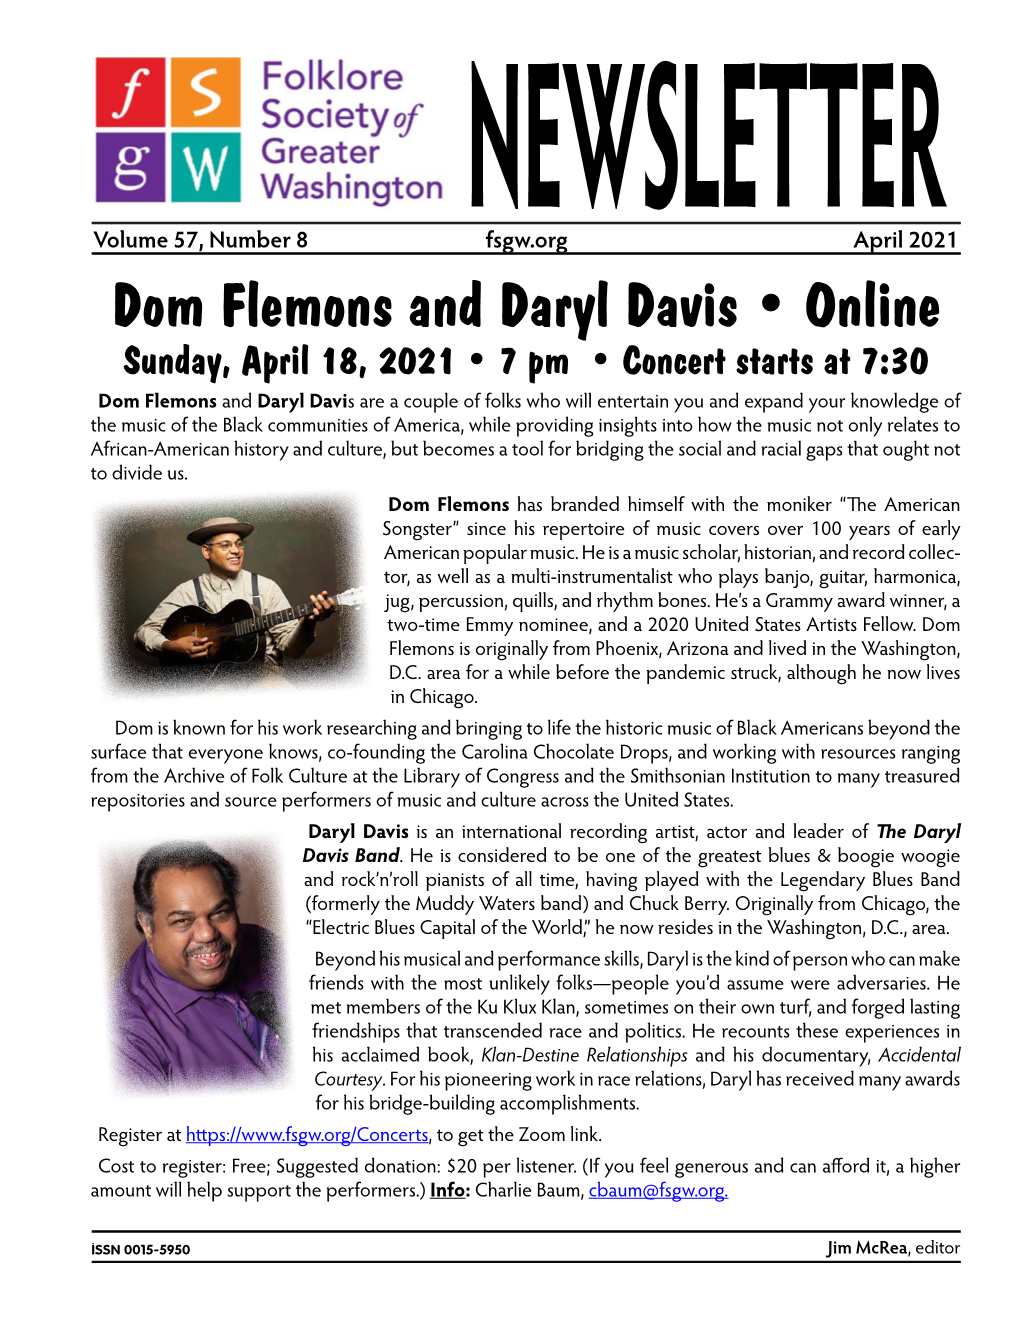 Dom Flemons and Daryl Davis • Online